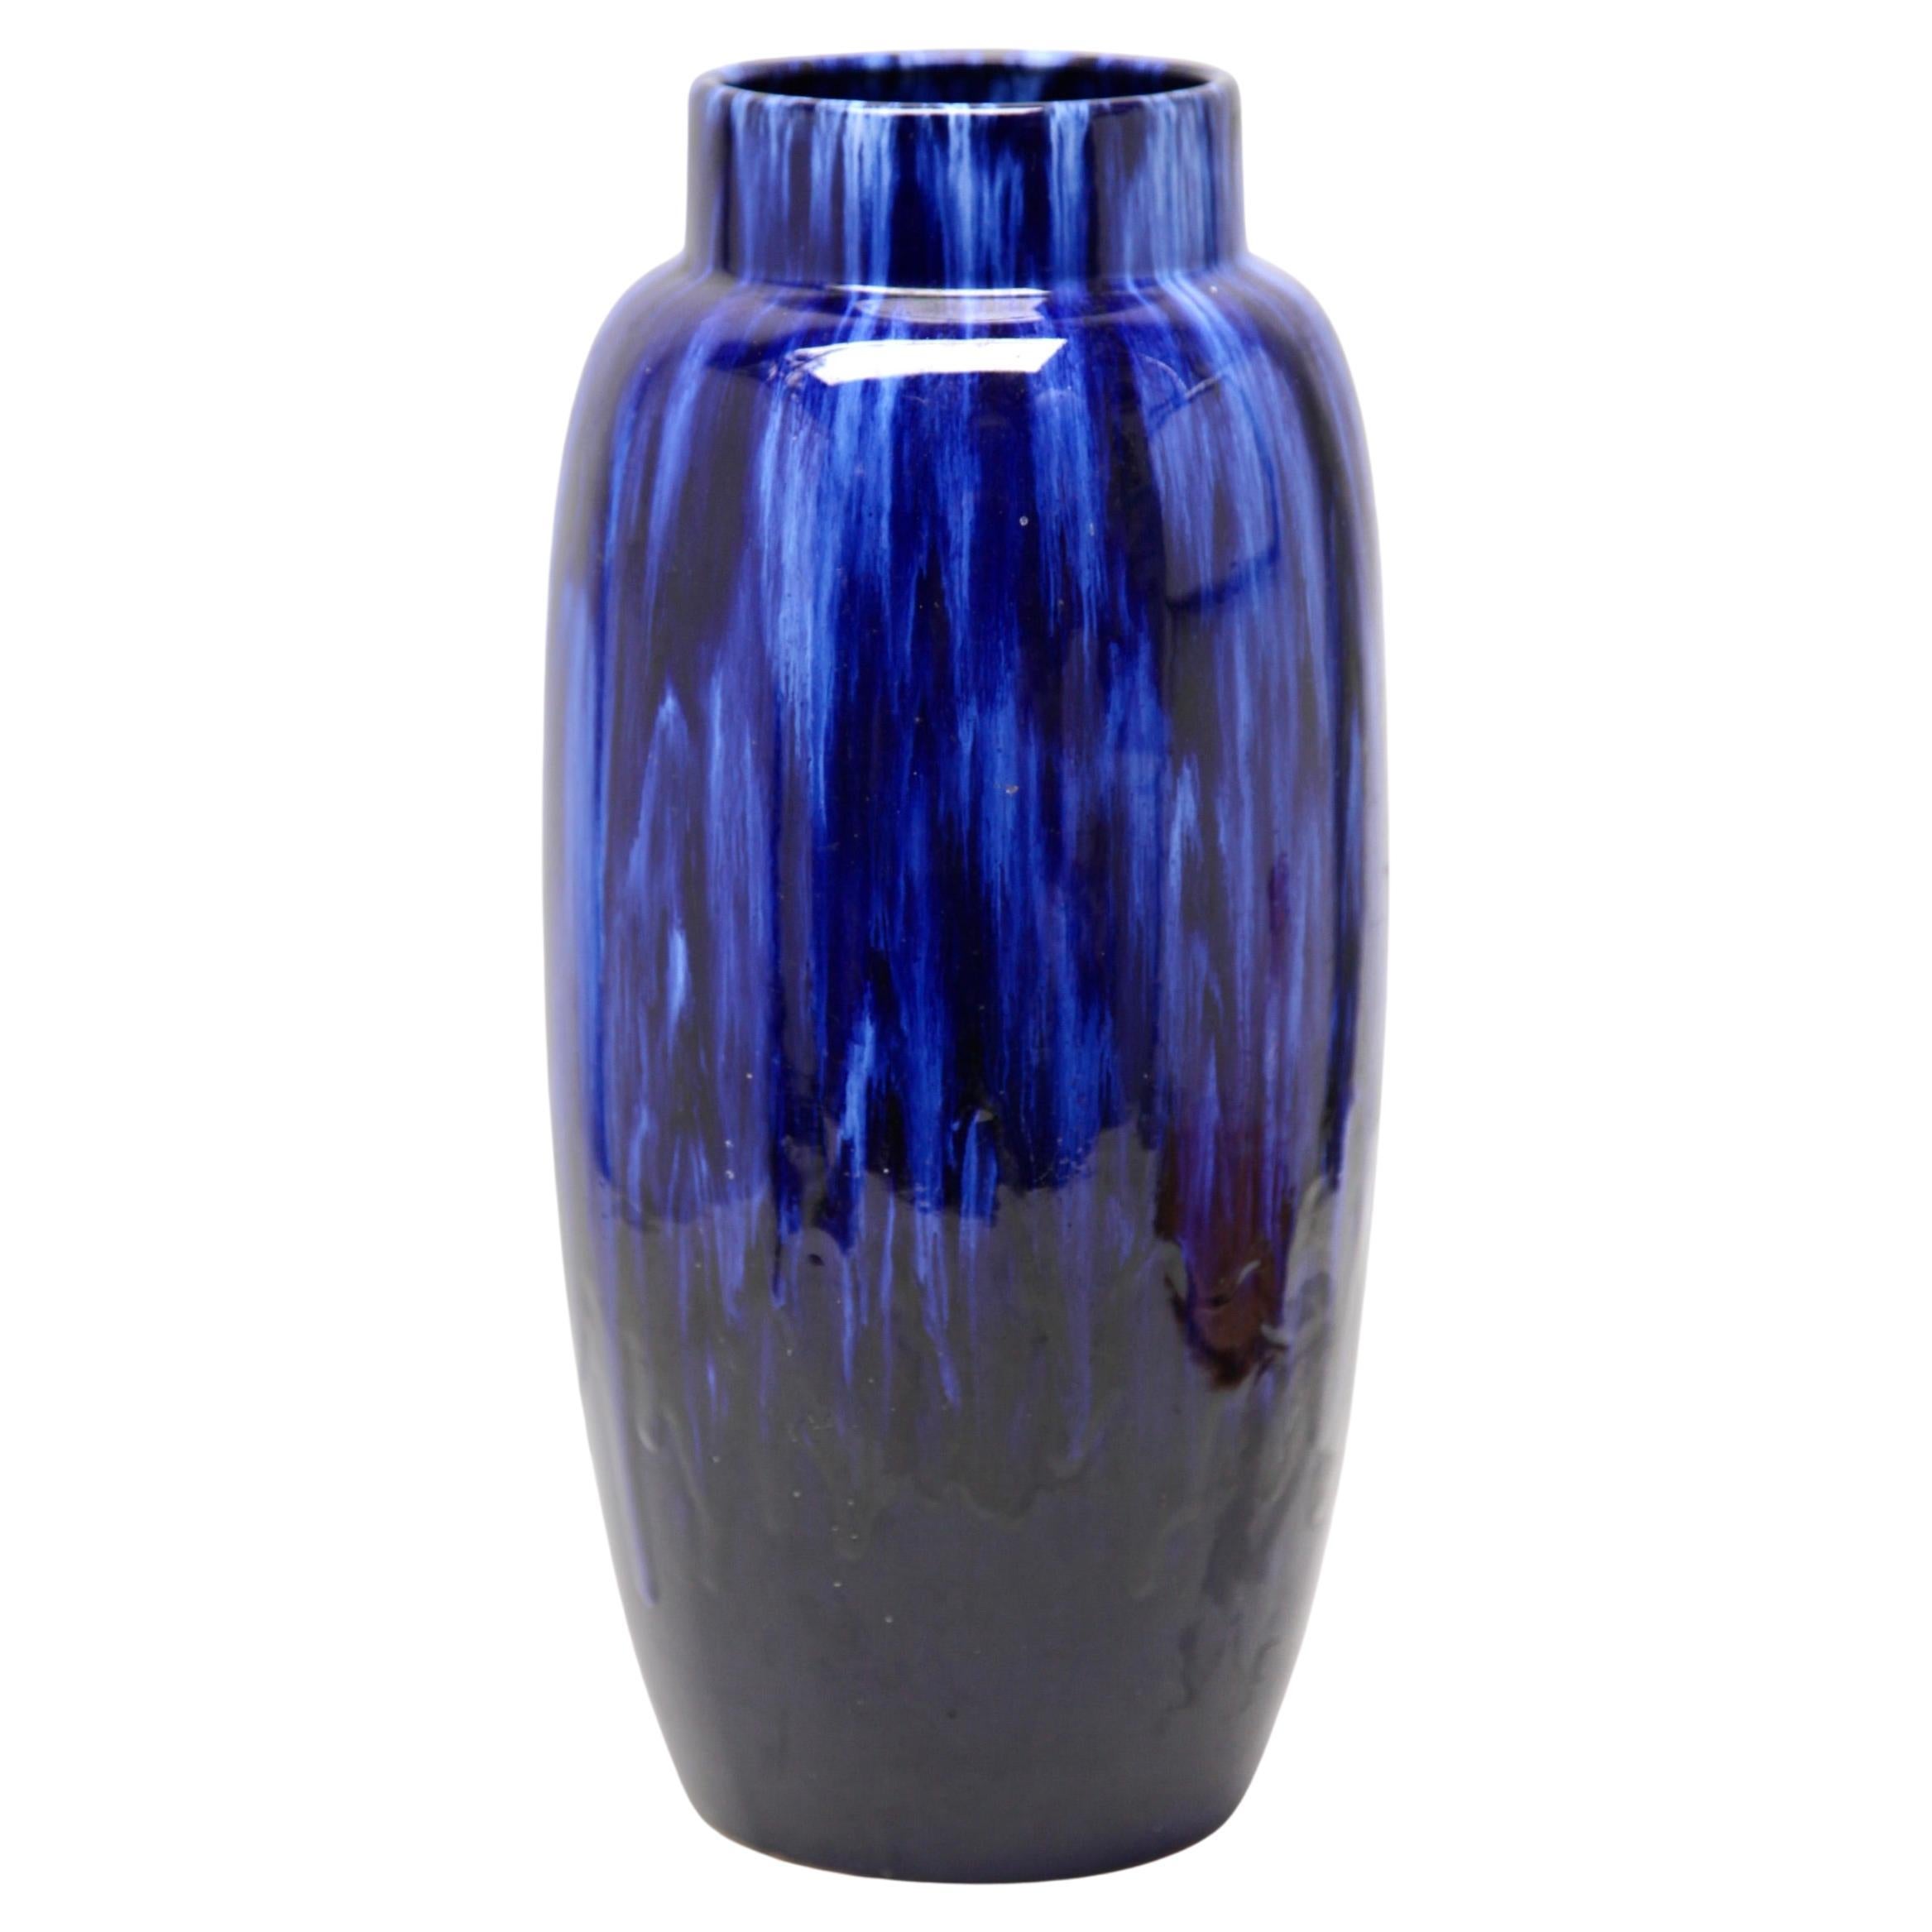 Scheurich Vintage Vase in Blue and Black Drip Glaze Germany, 1970s For Sale